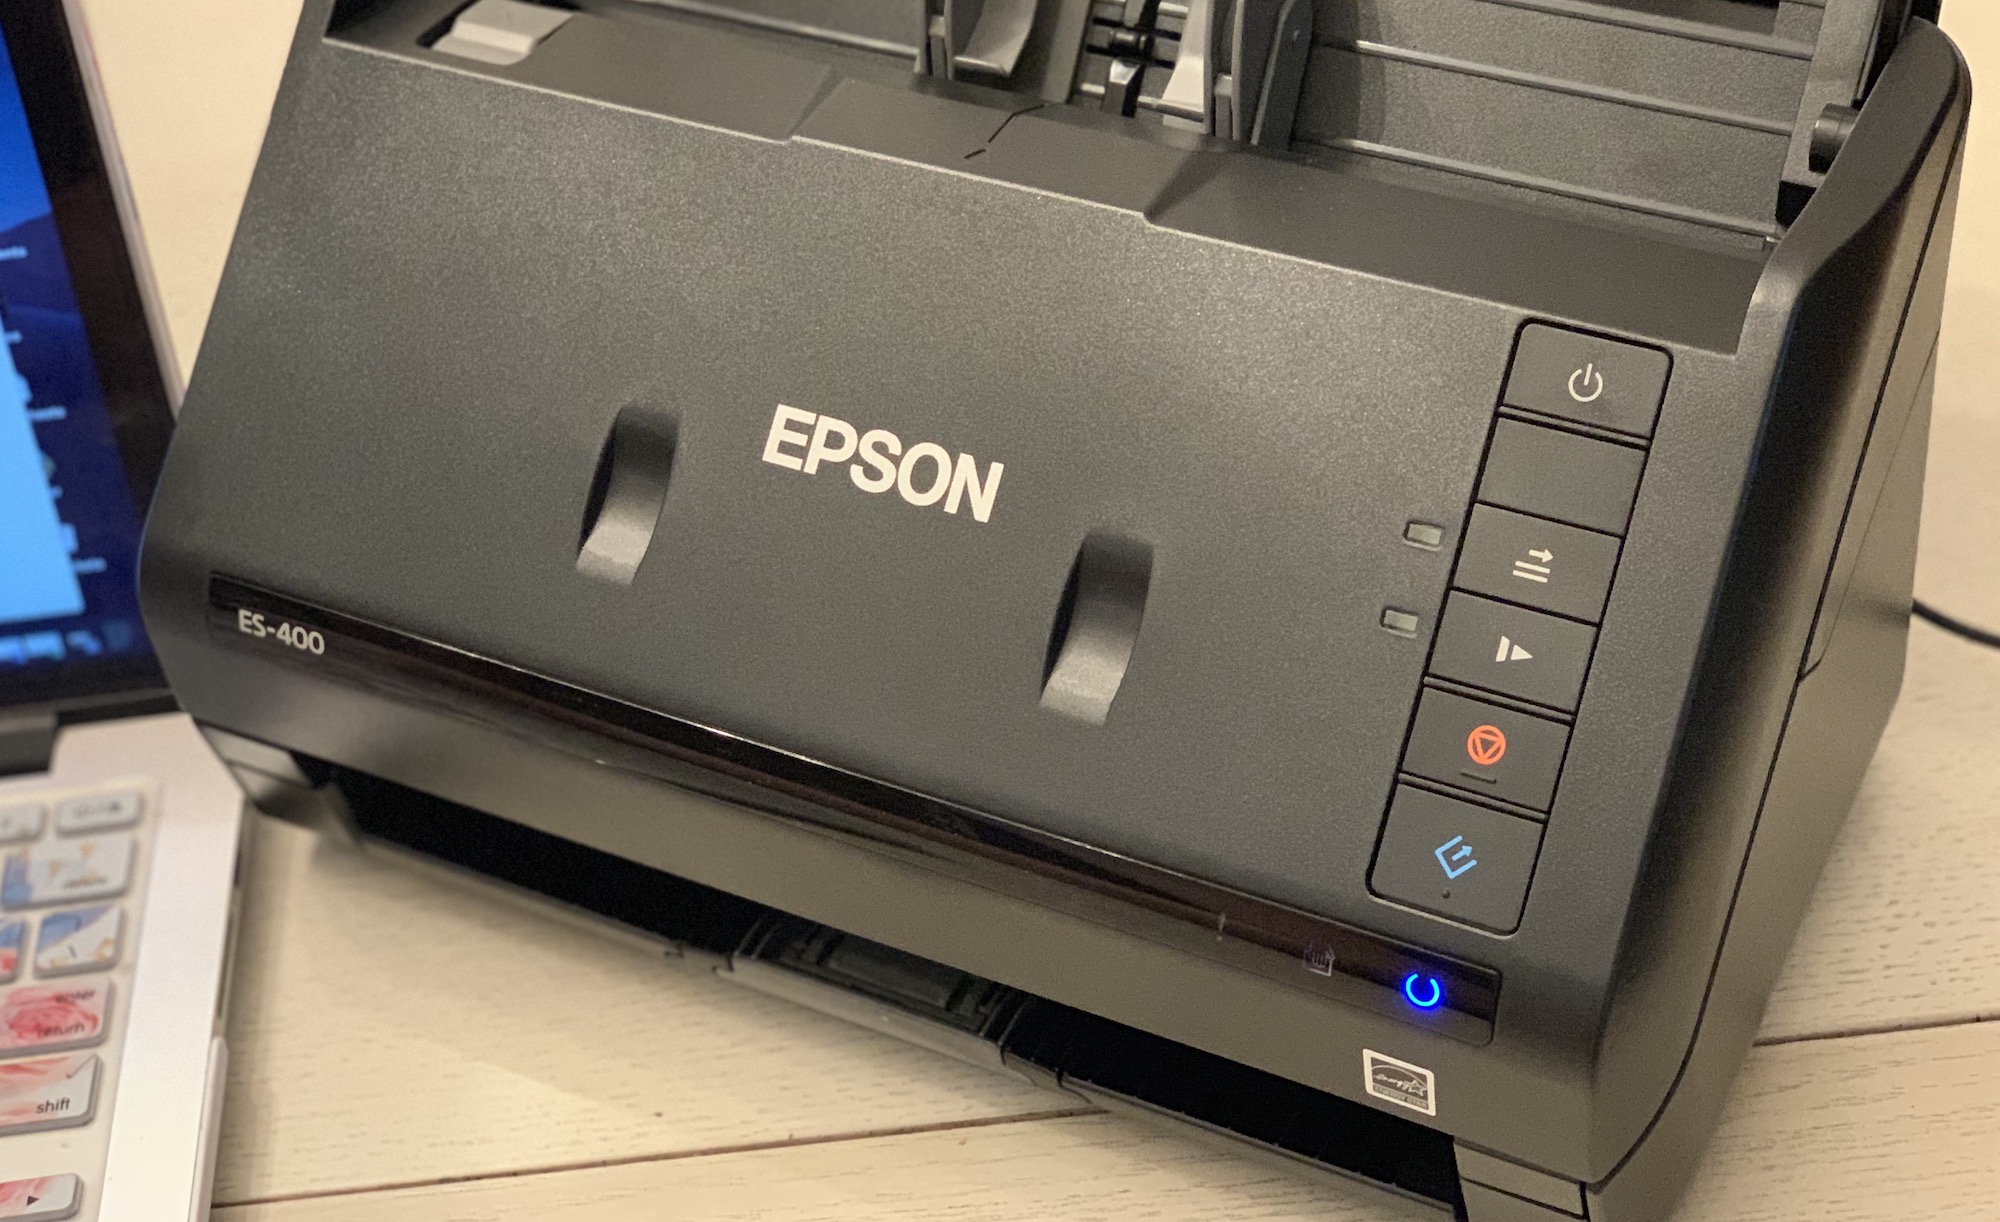 Epson ES-400 options